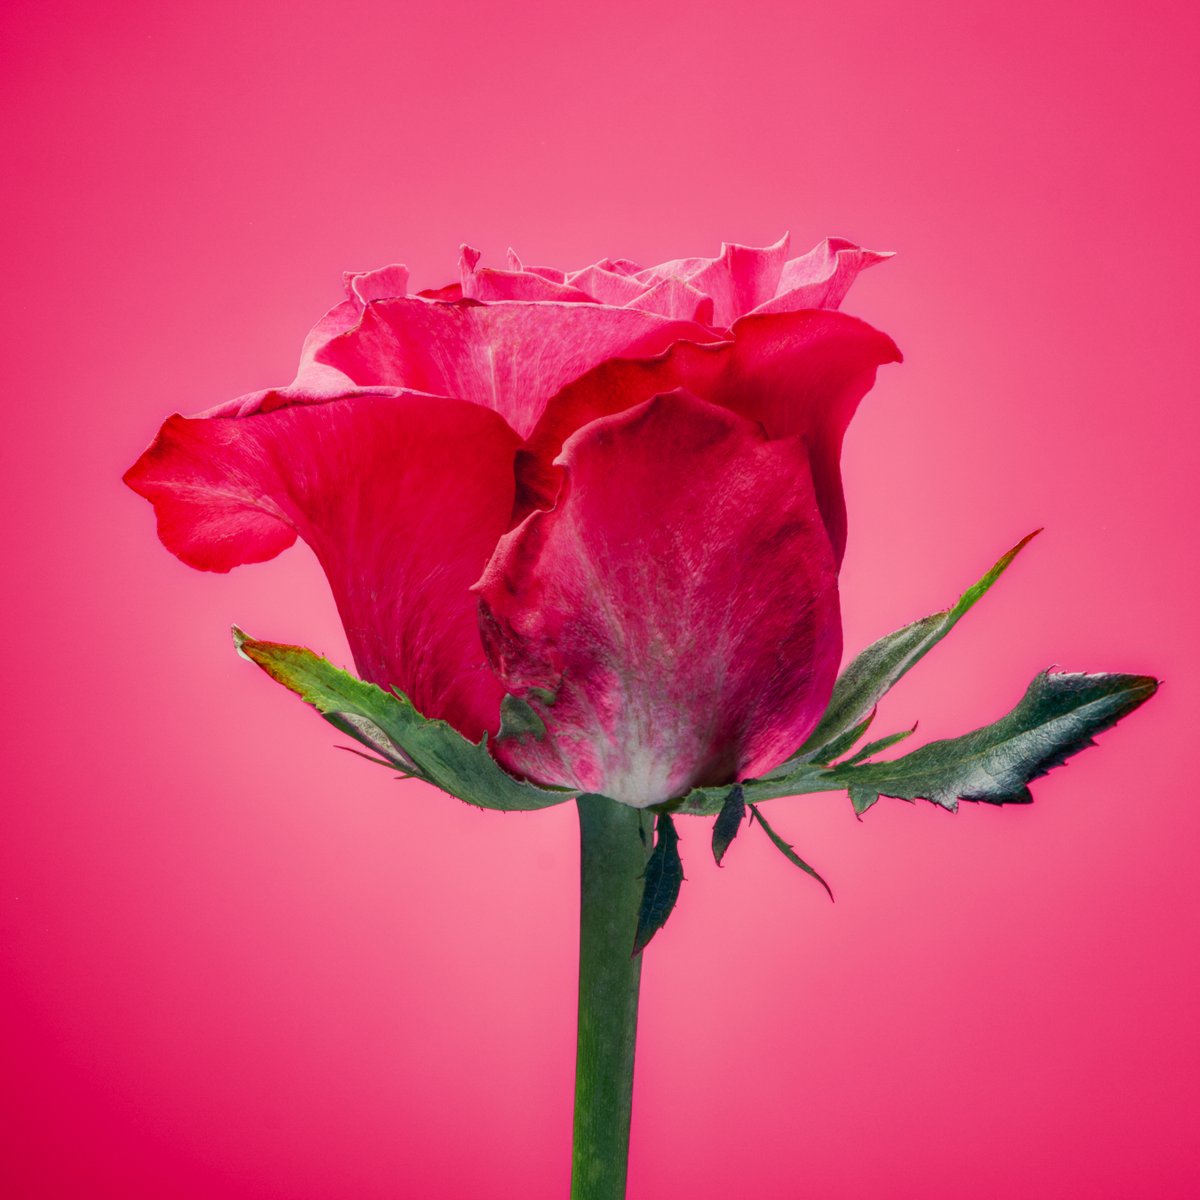 Flower photo of the day. Pink-Red Rose. #macro #flowers #bloemenfotografie #flowersandmacro #bloemen #blumen #fleurs #raw_flowers #snap_flowers